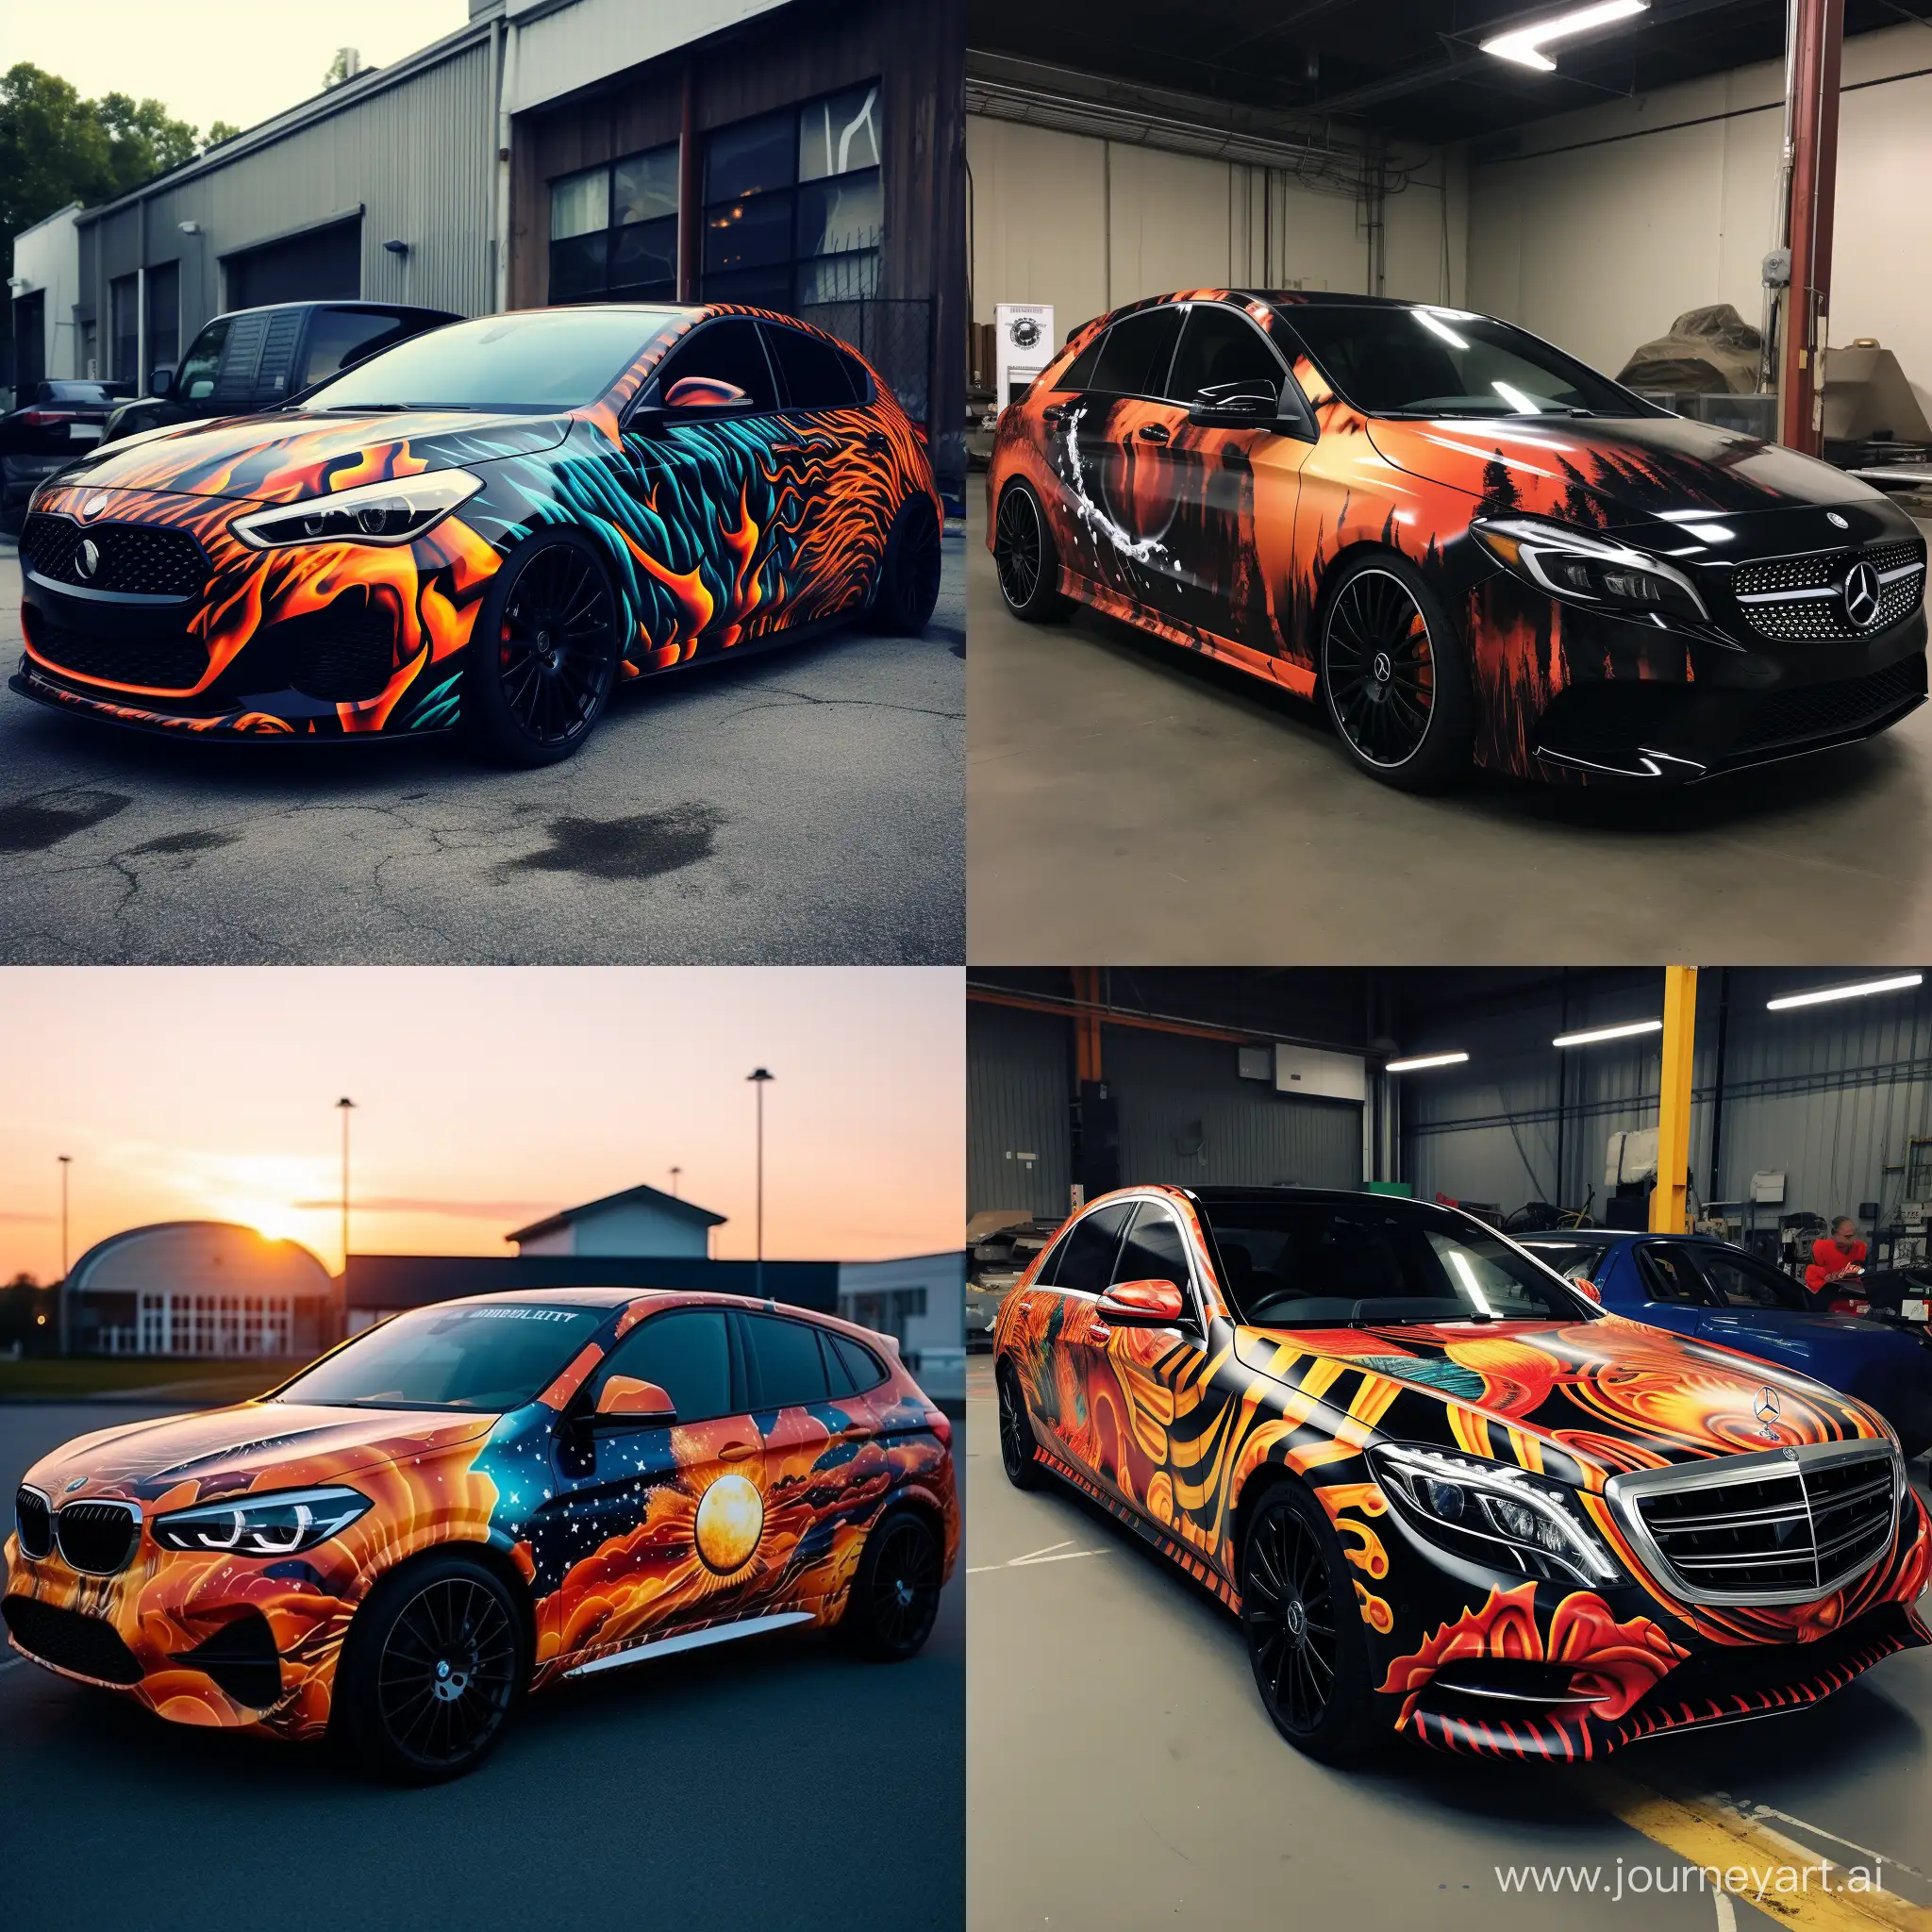 Vibrant-11-Car-Wraps-Gallery-Inspiring-Automotive-Artistry